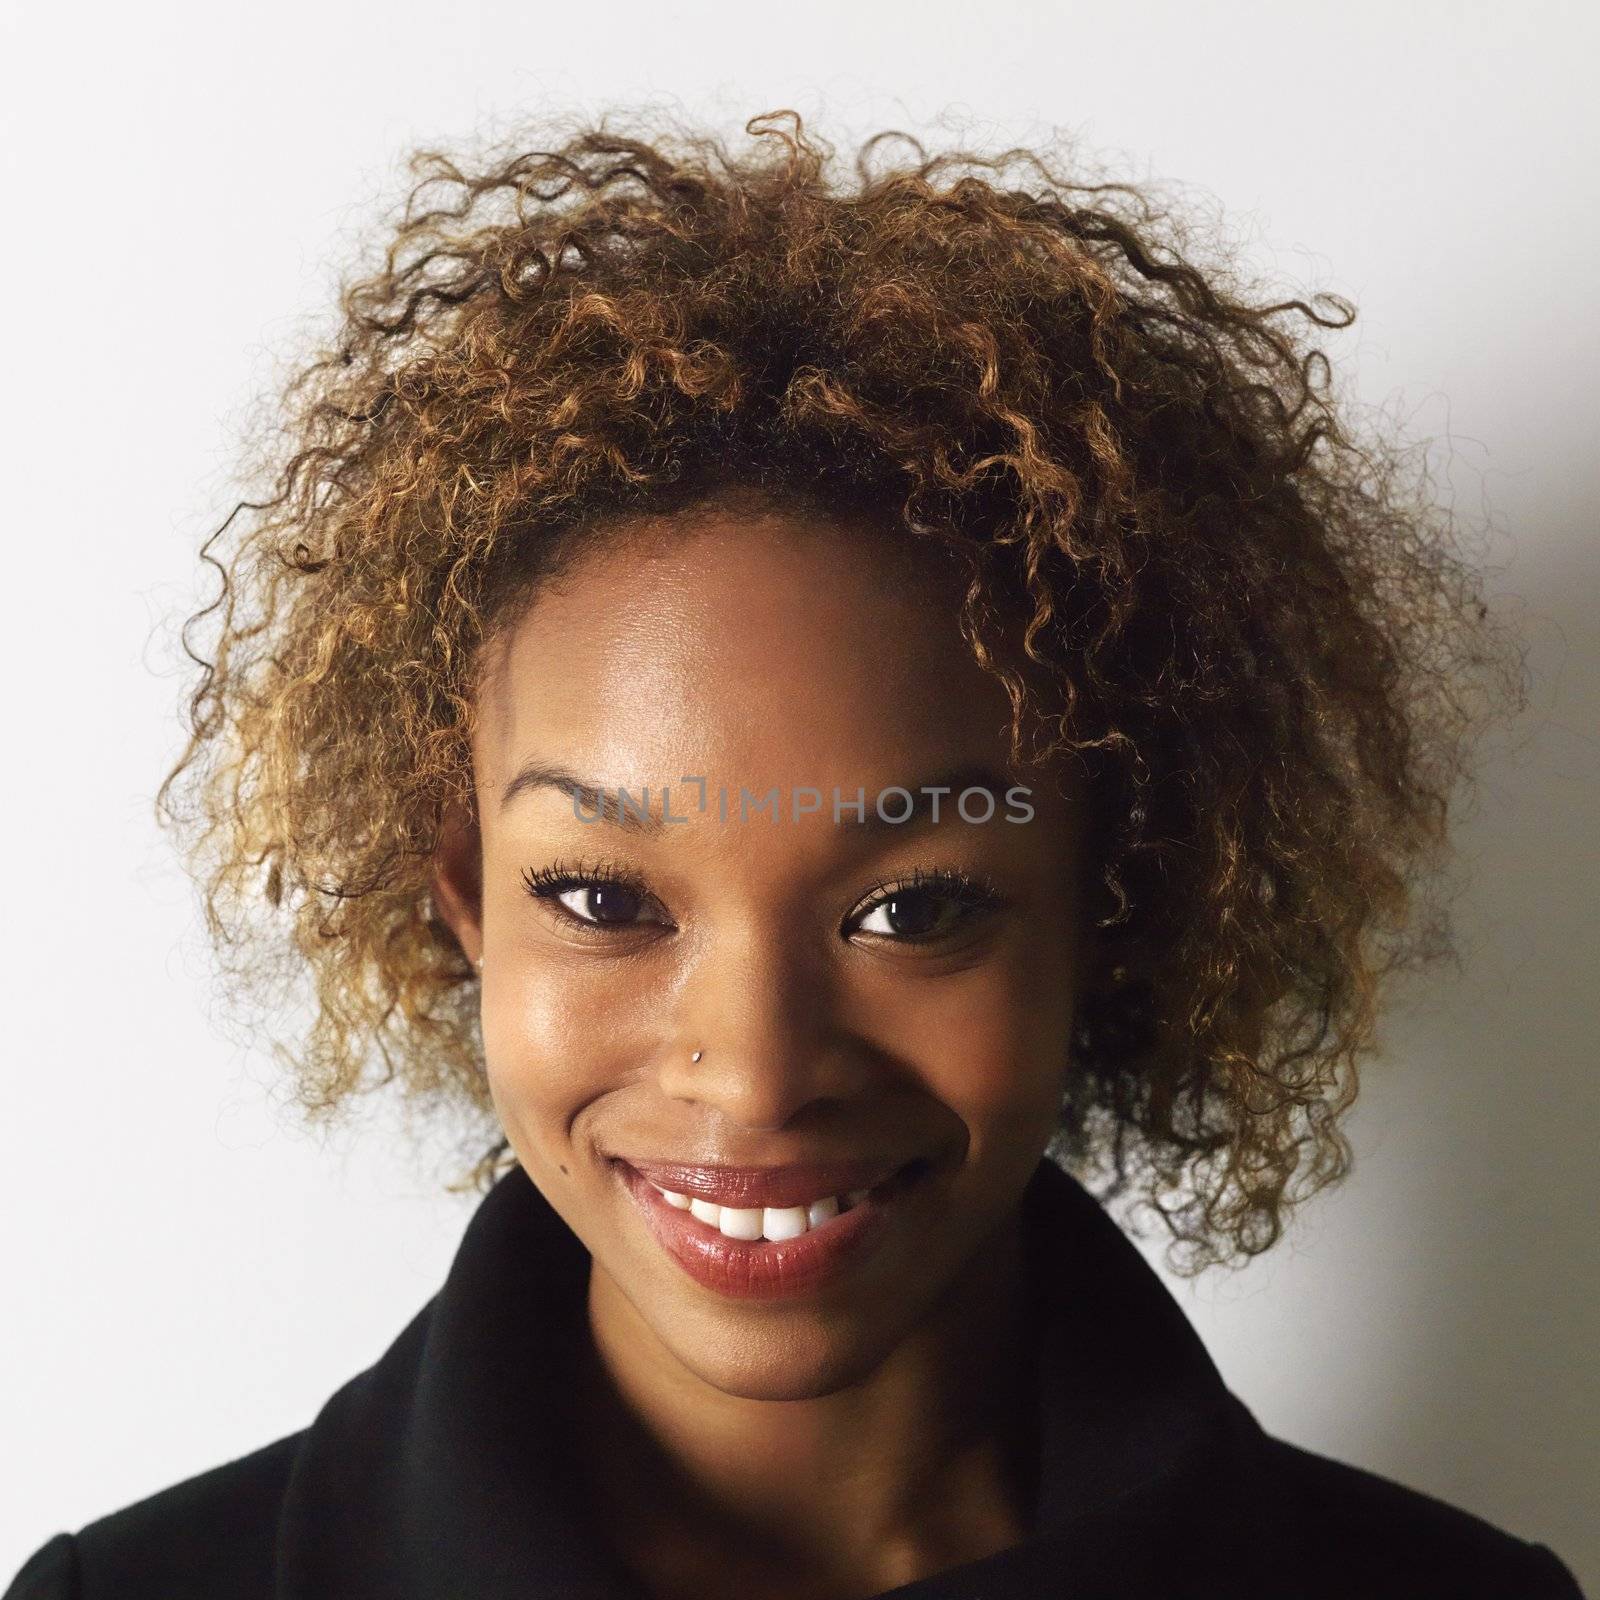 Smiling woman headshot by iofoto